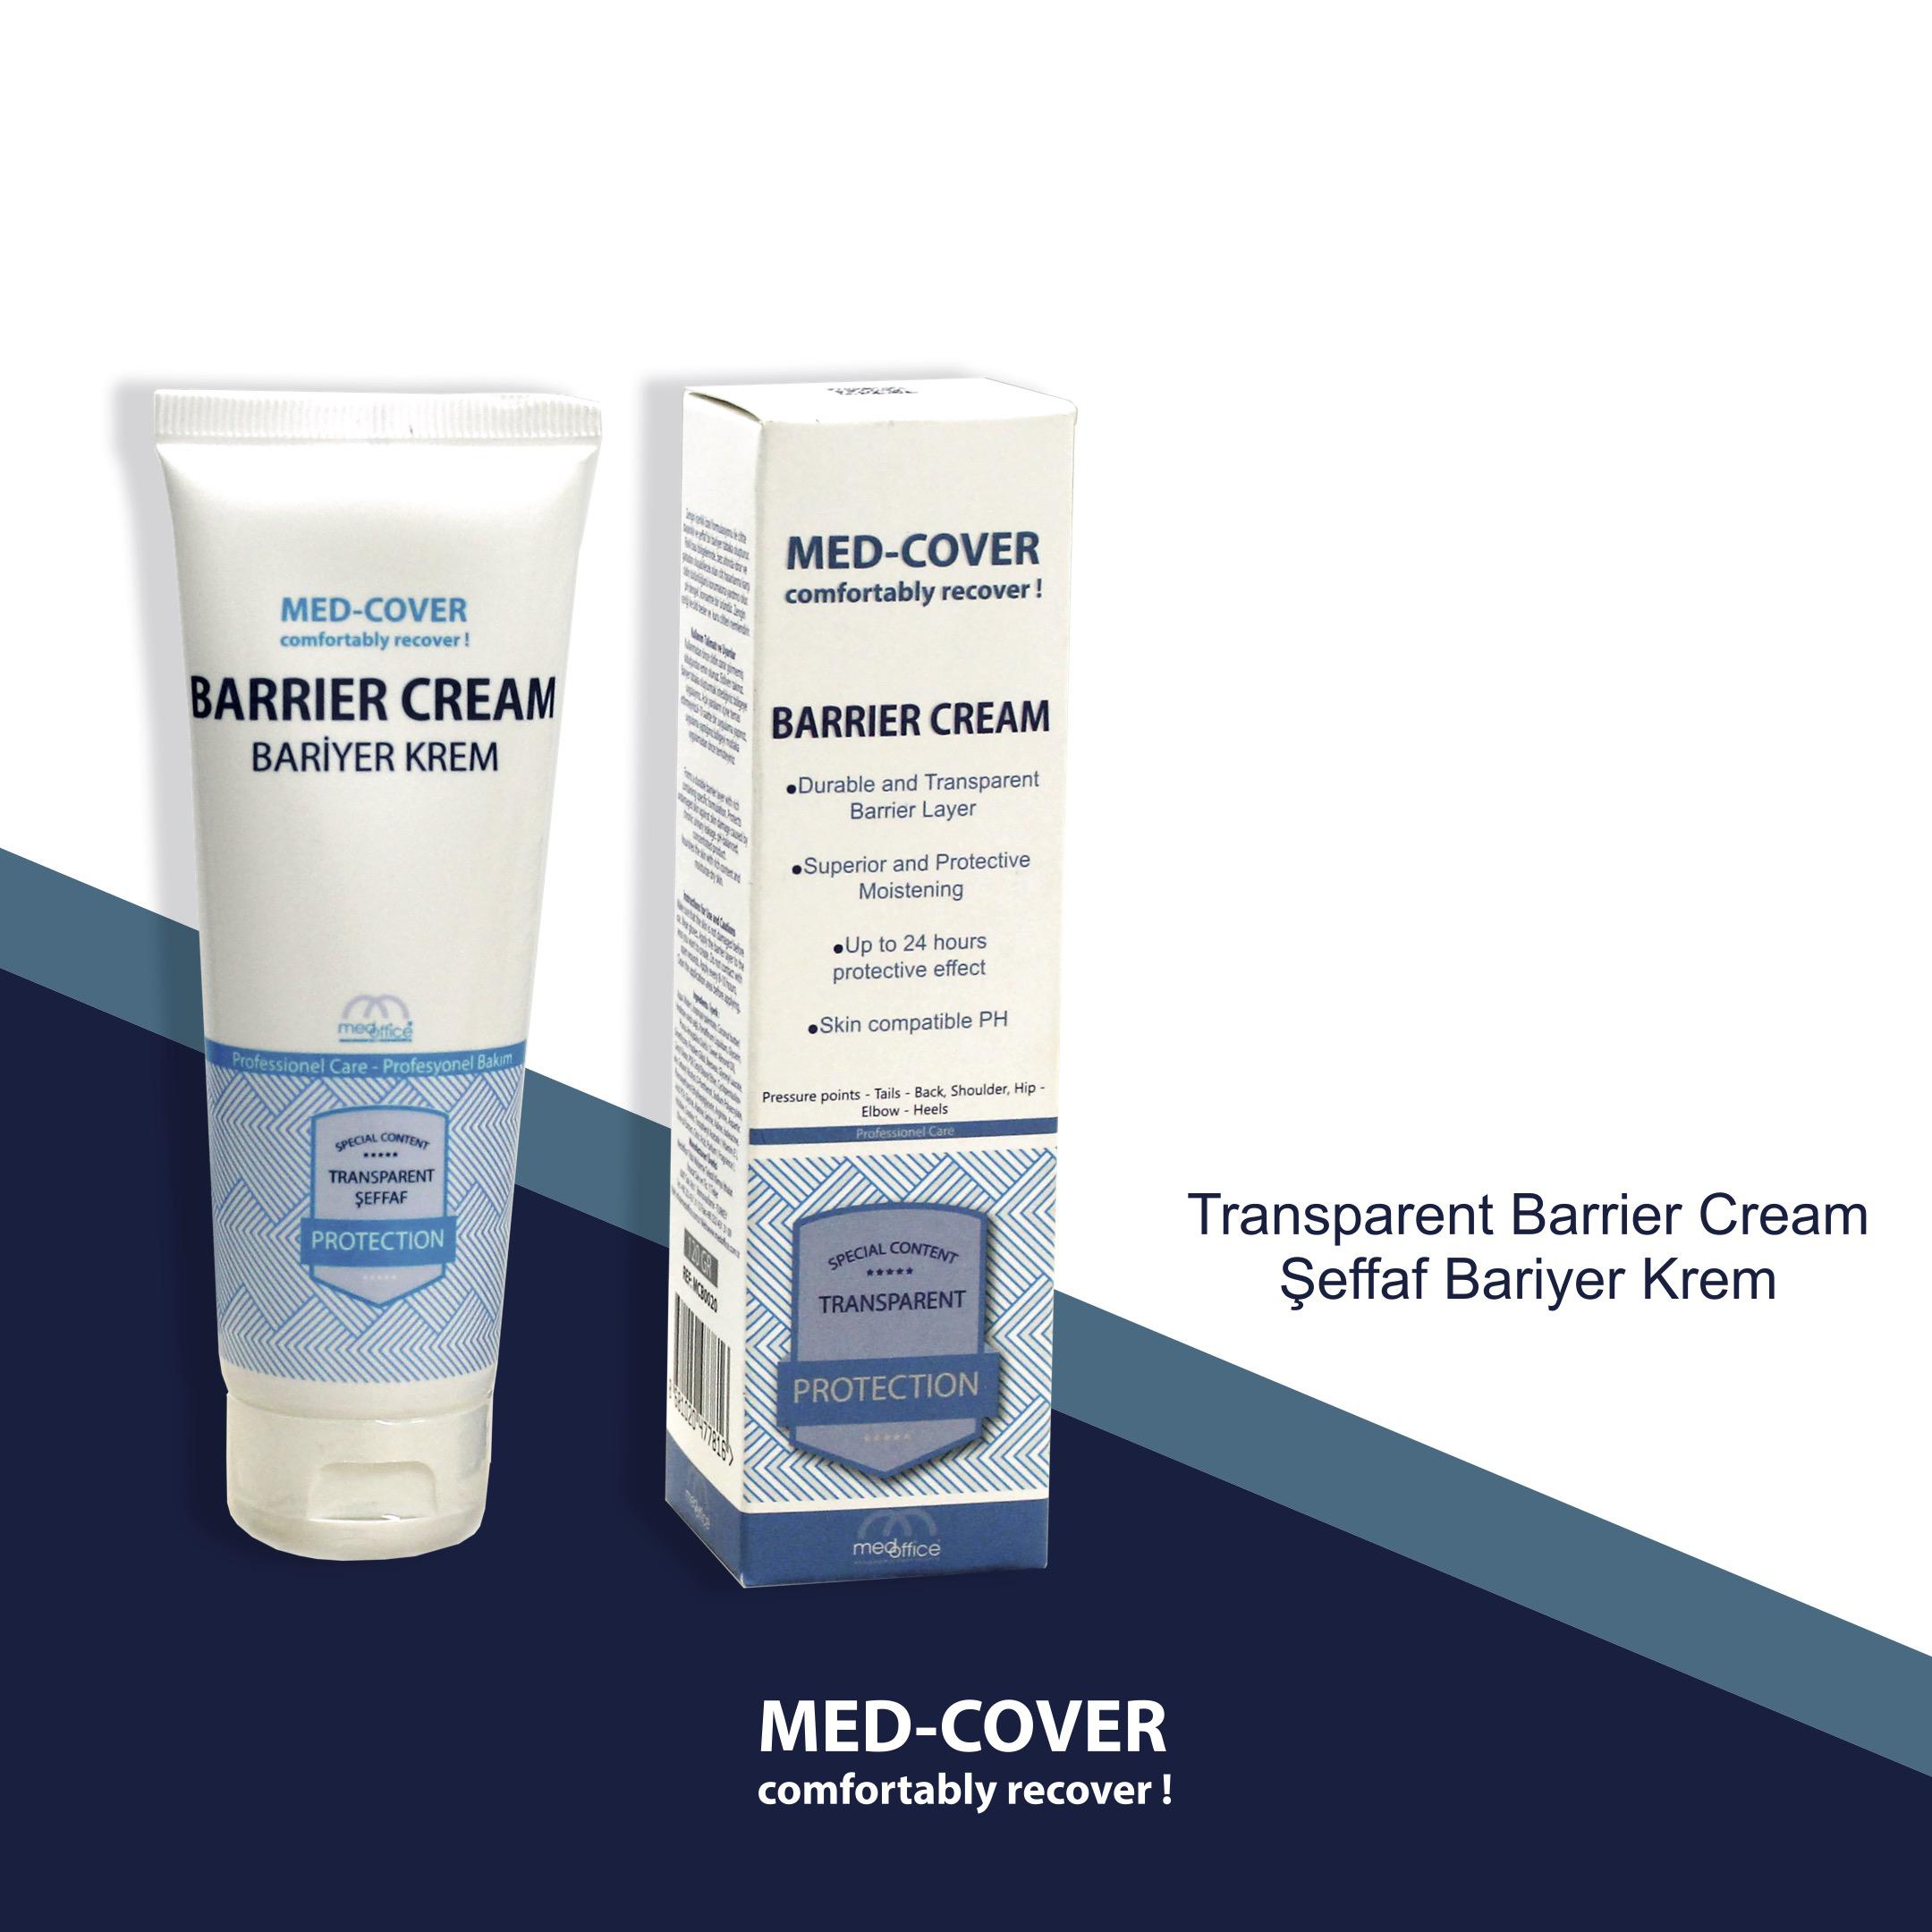 MED-COVER Transparent Barrier Cream